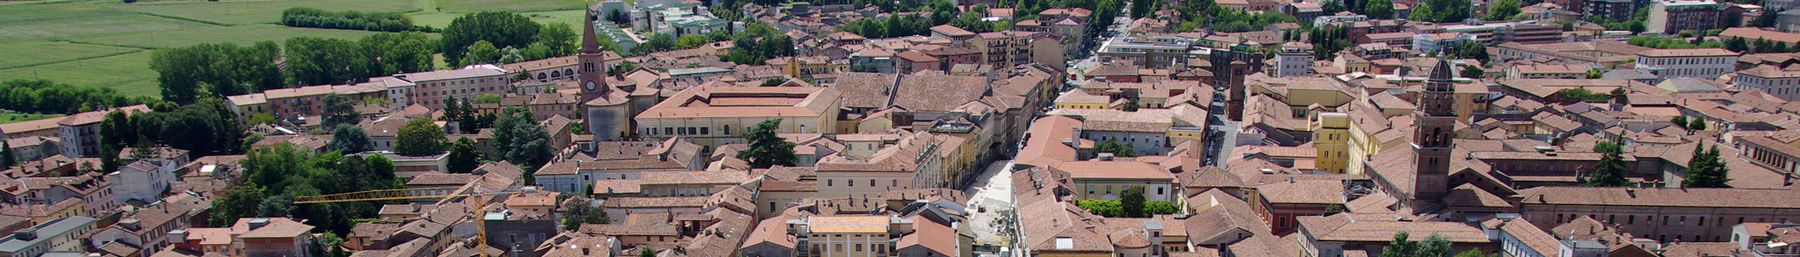 Cremonese banner.jpg